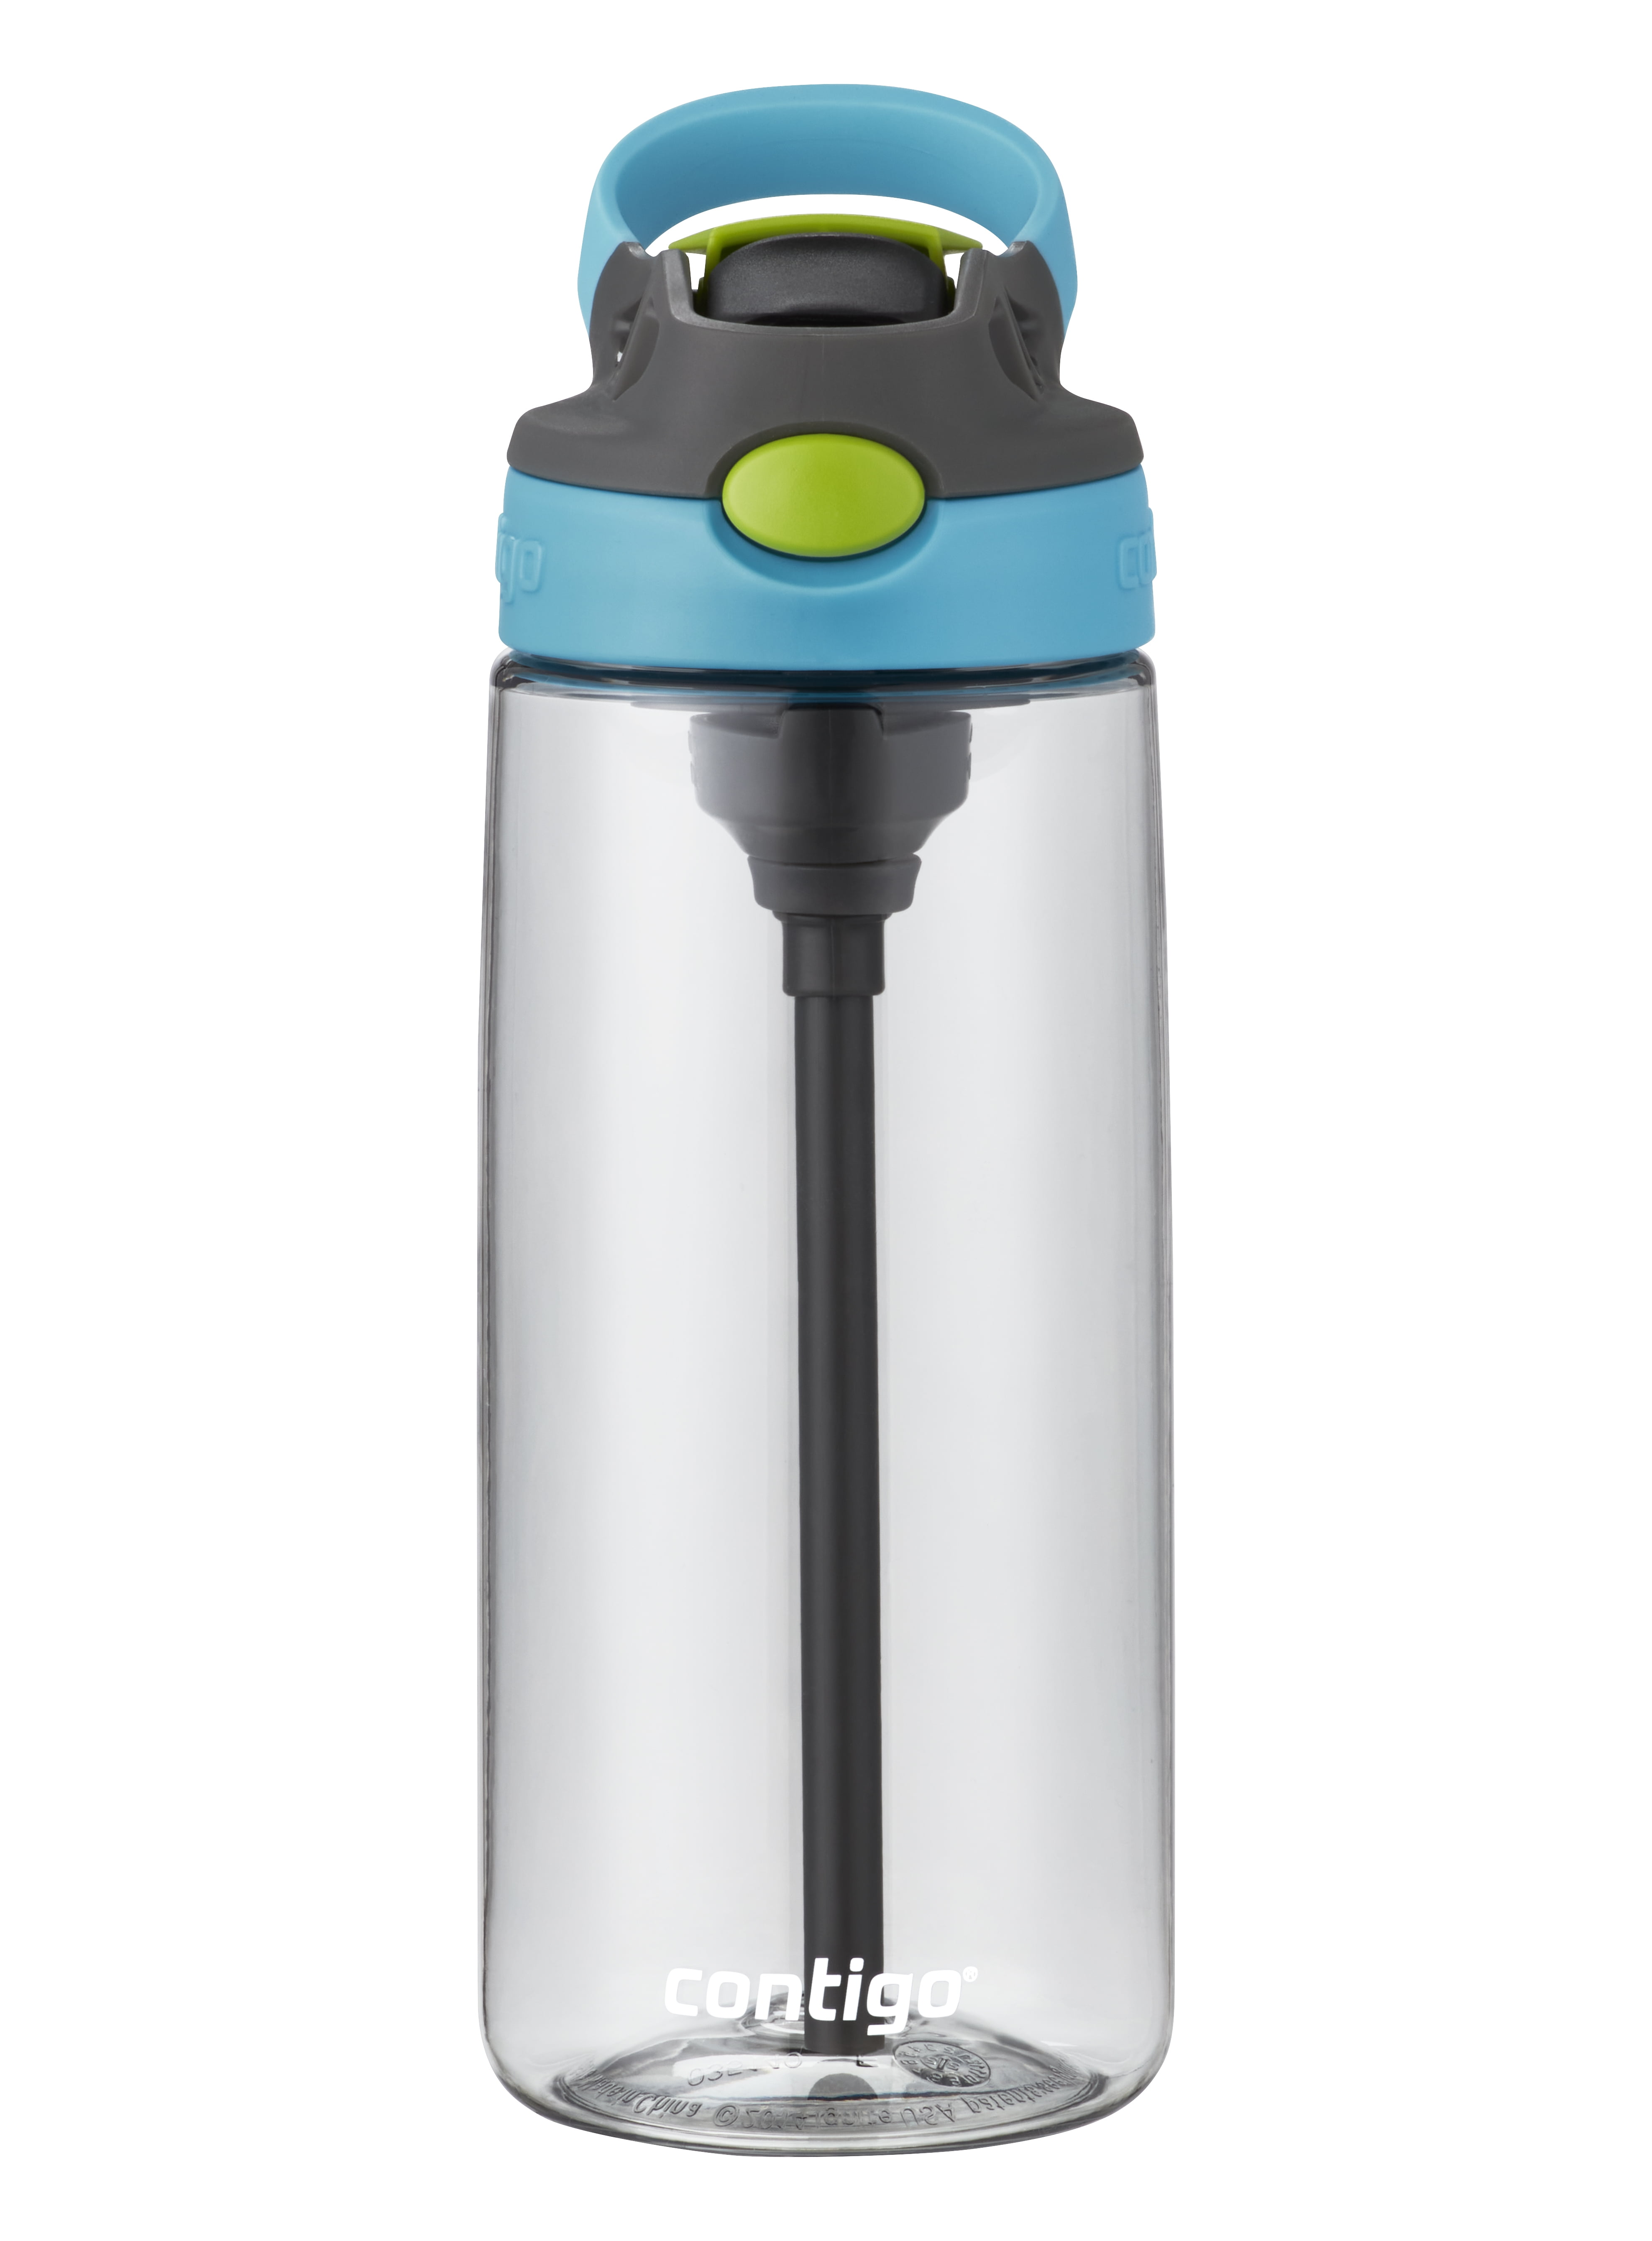 Contigo Kids Plastic Water Bottle with AUTOSPOUT Straw Lid Sake Grey & Blue  Raspberry, 20 fl oz.